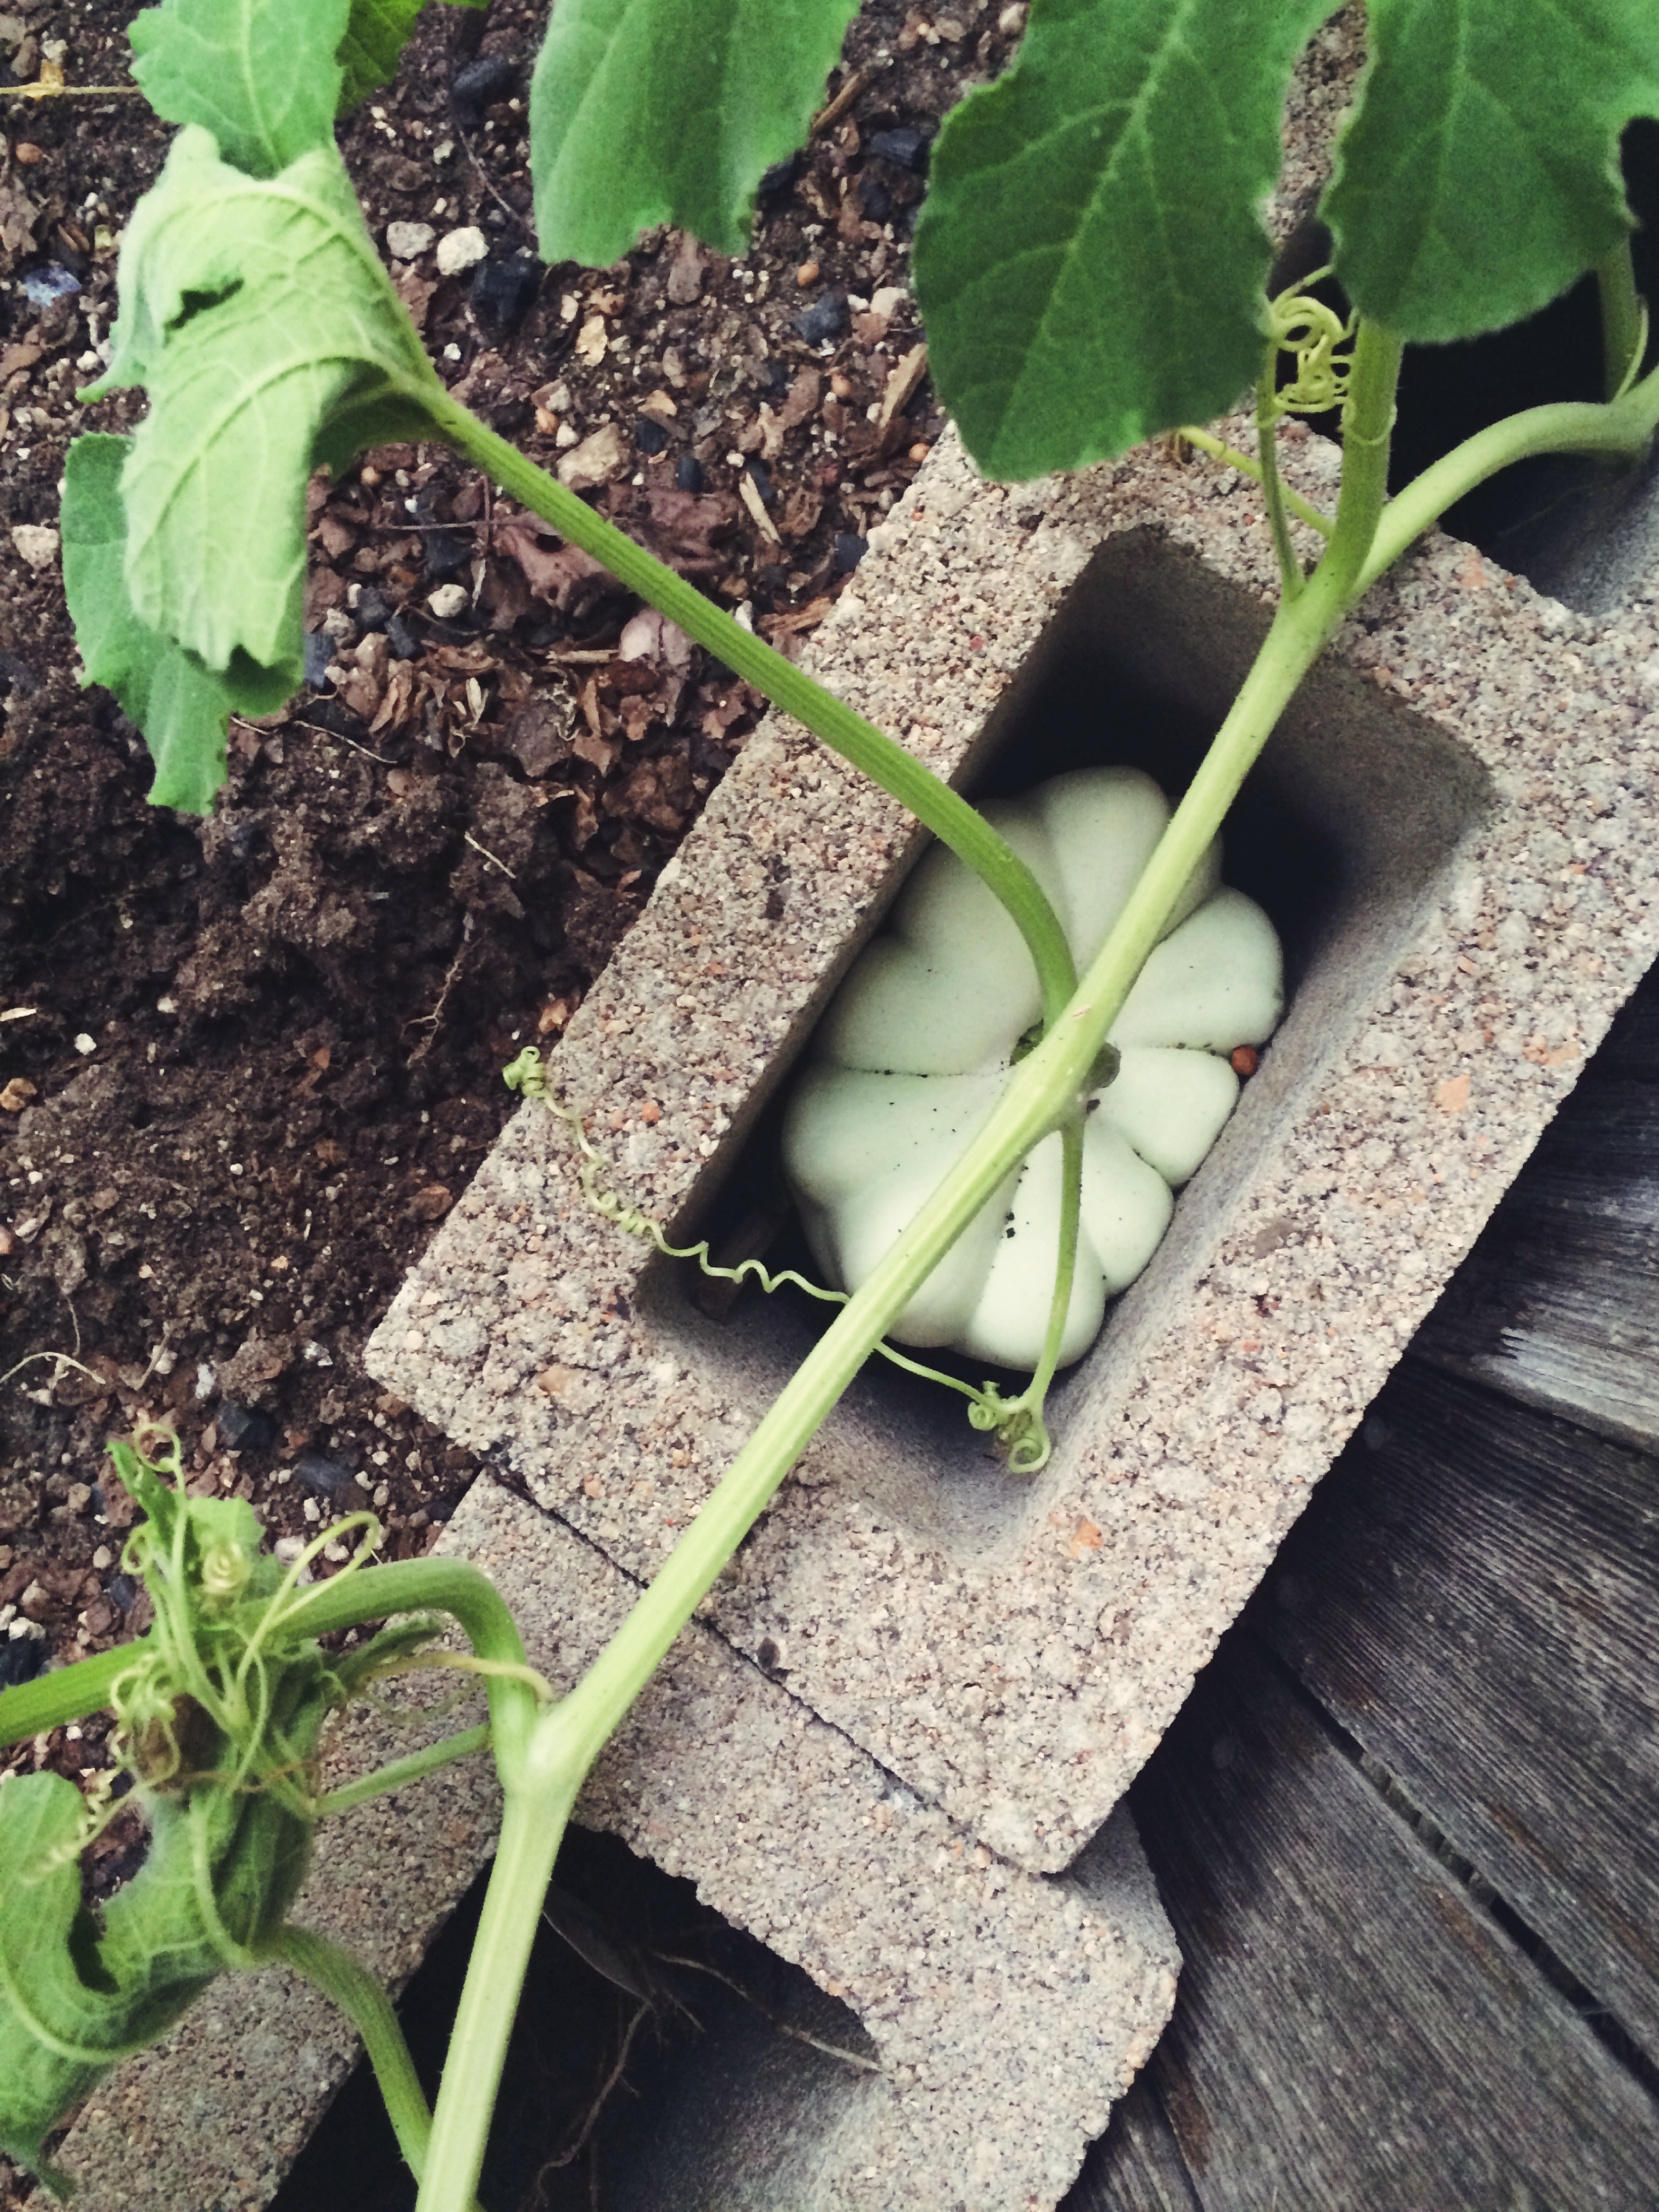 acorn squash growing inside a cinder block